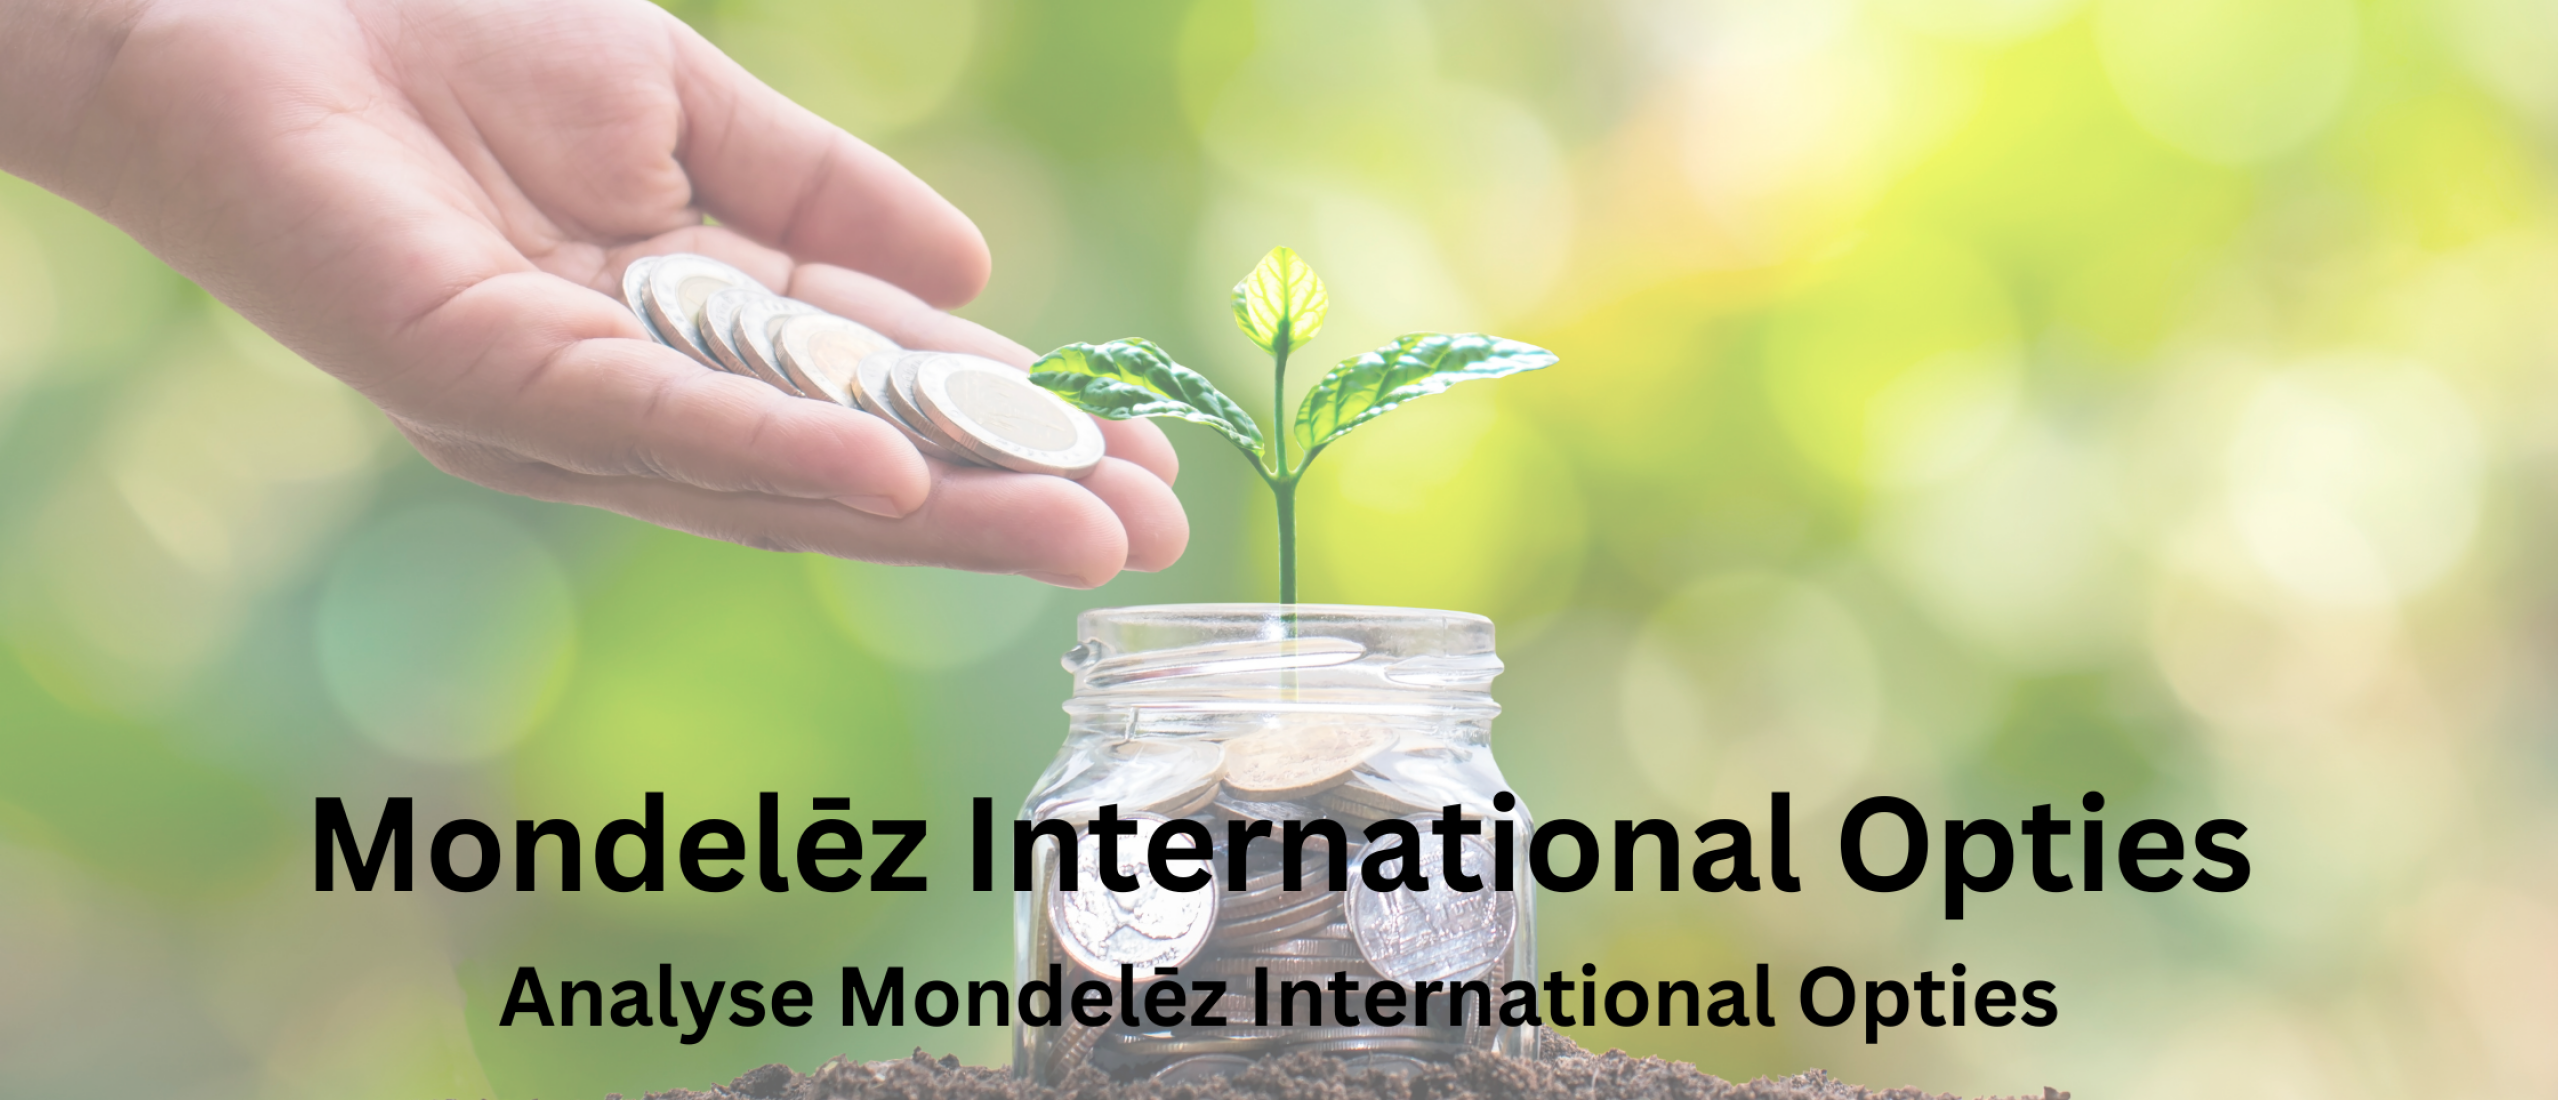 mondelz-international-opties